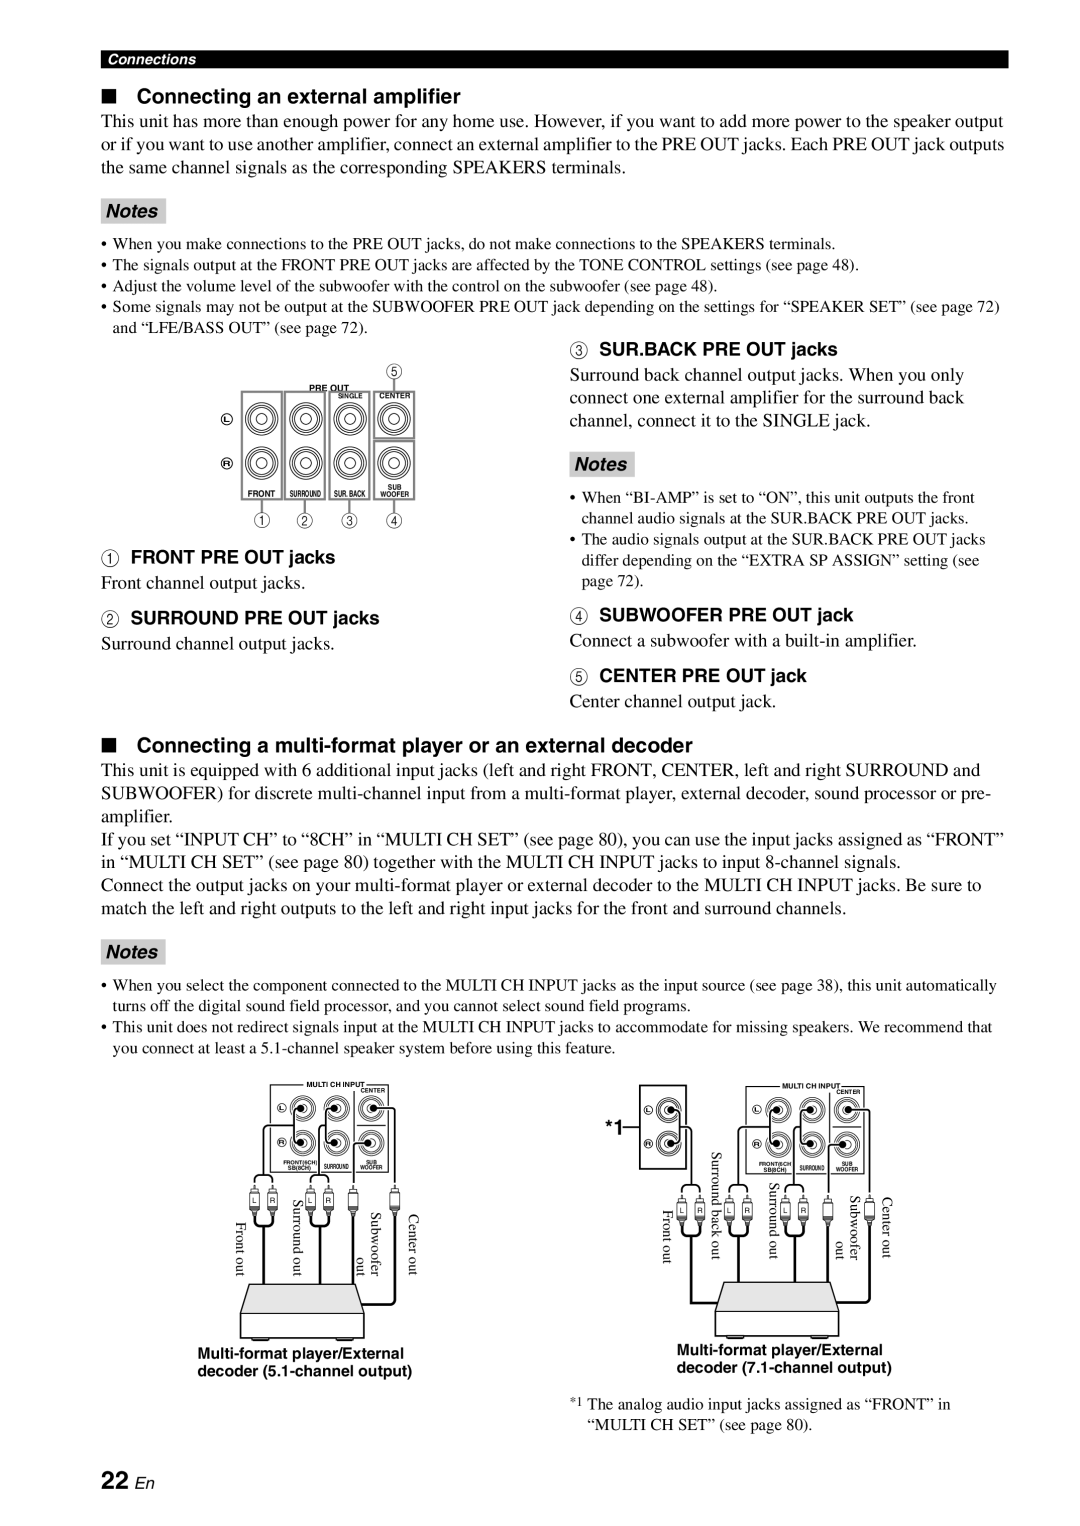 Yamaha HTR-6080 owner manual 22 En, Connecting an external amplifier, Notes 